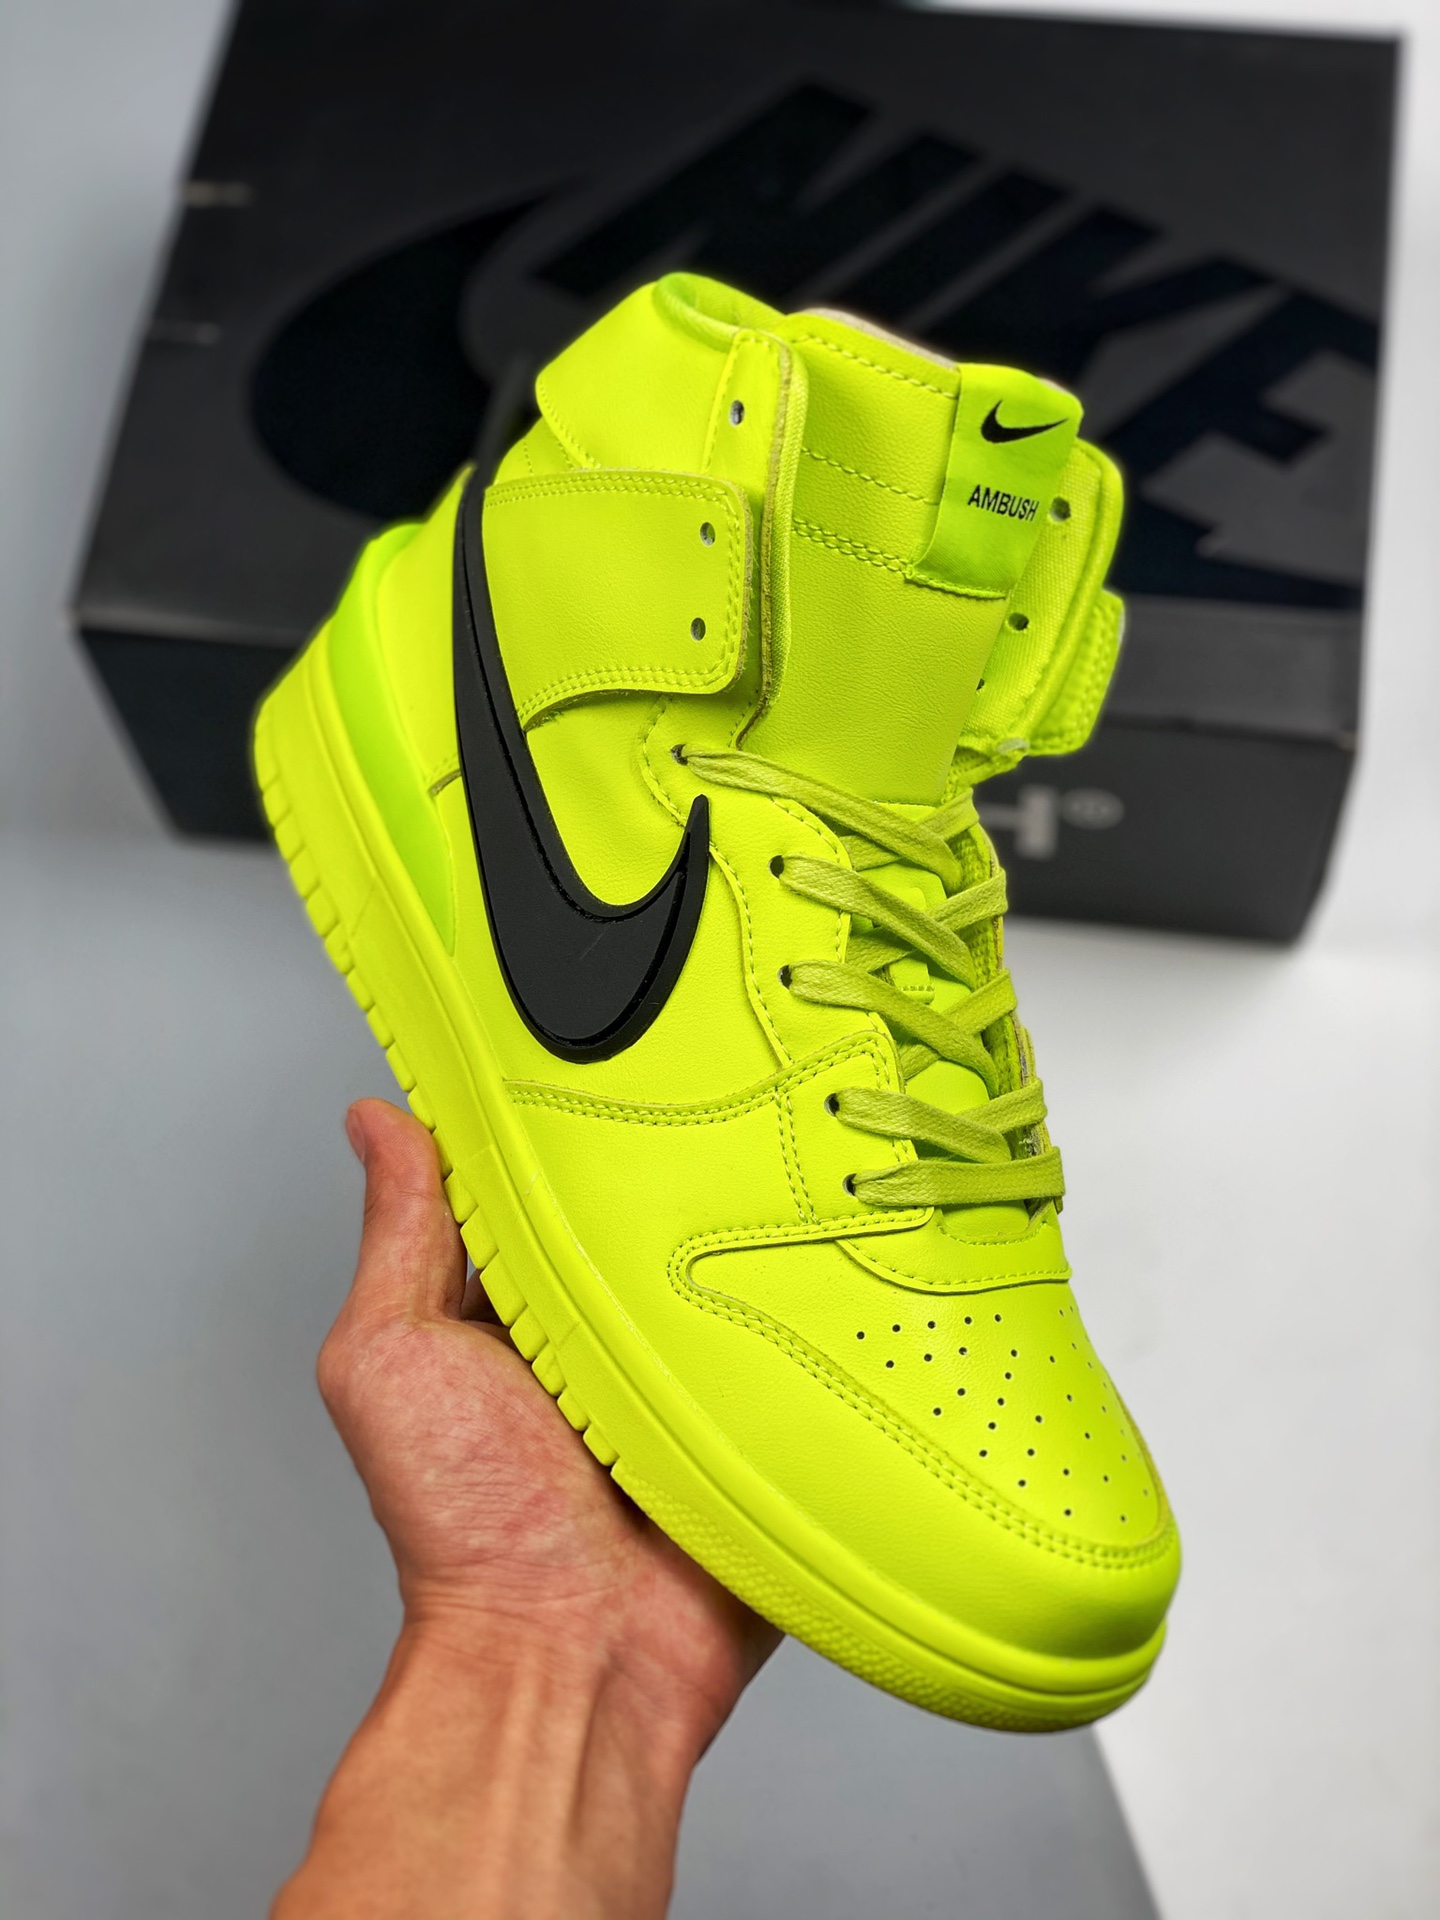 AMBUSH x Nike Dunk High "Atomic Green" CU7544-300 Shoes